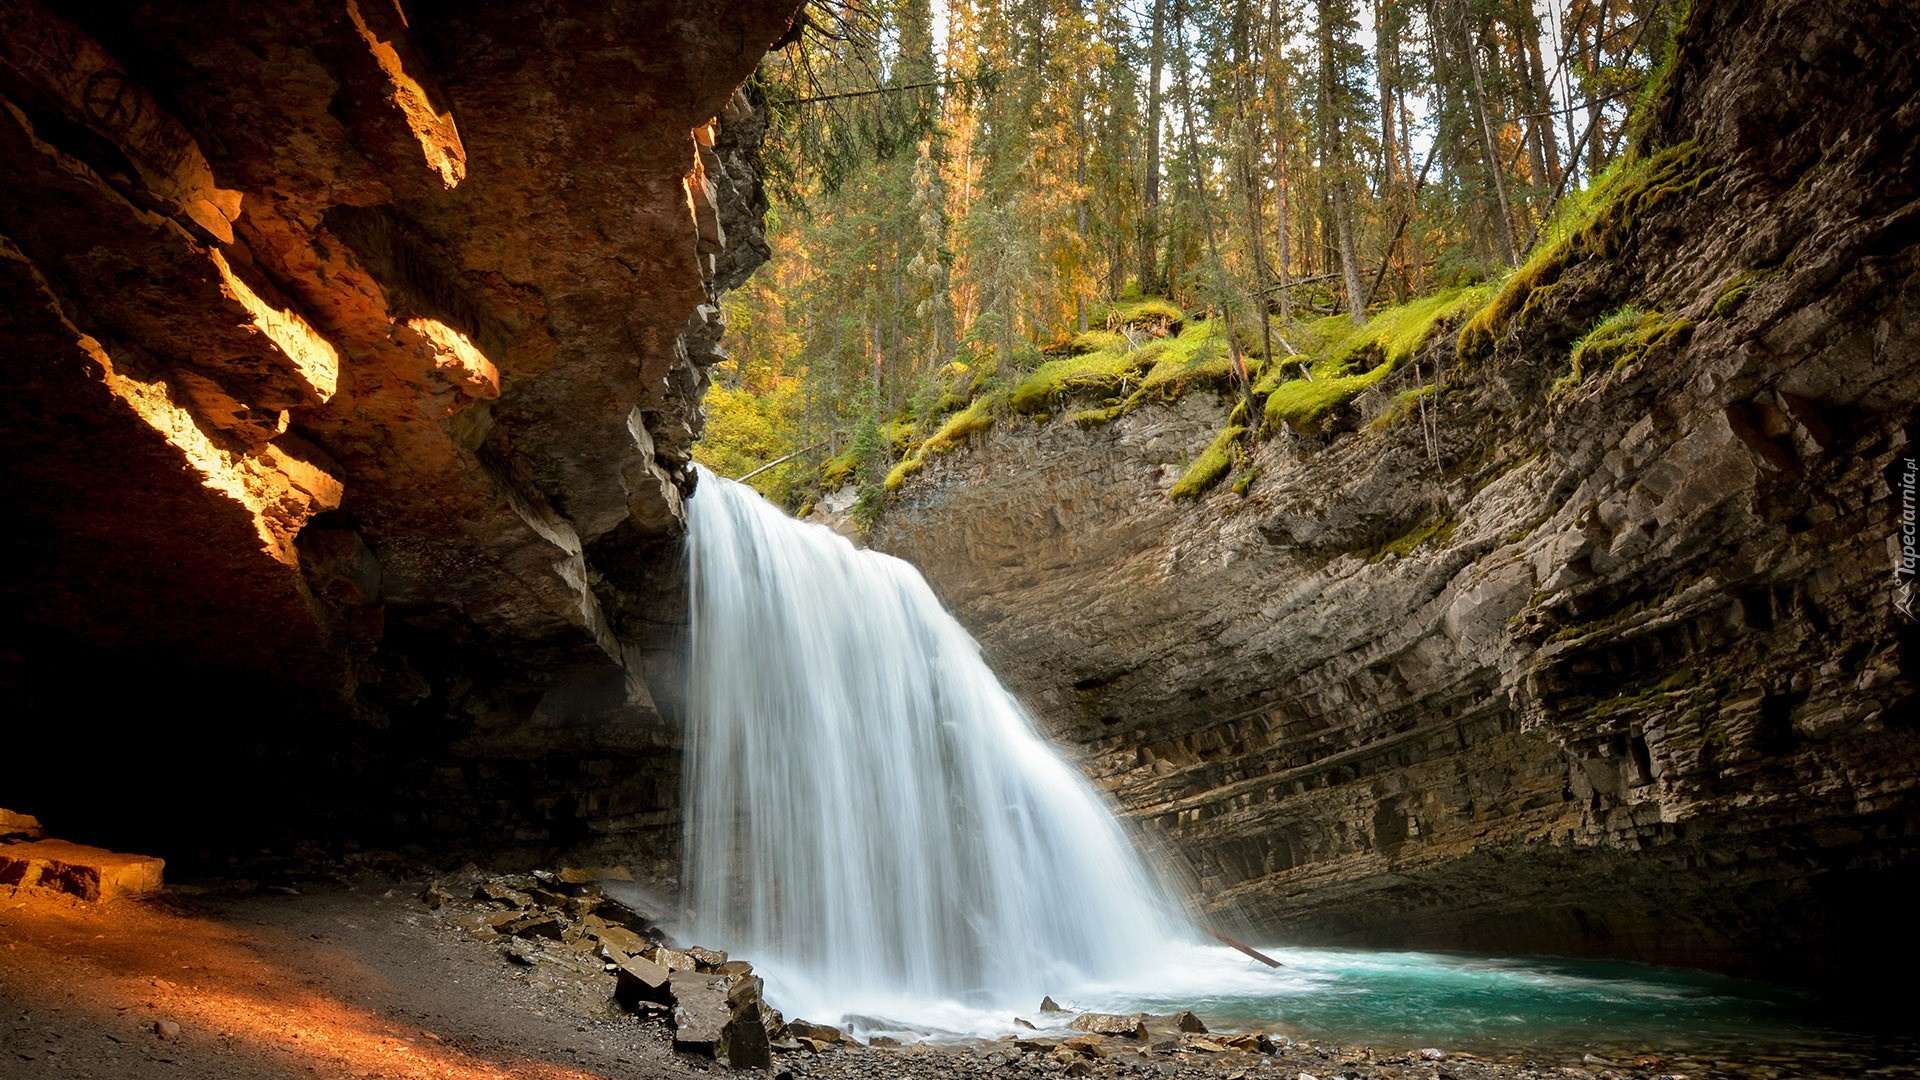 Kanada, Alberta, Park Narodowy Banff, Rzeka, Johnston Creek, Wodospad, Upper and Lower Falls, Skała, Las